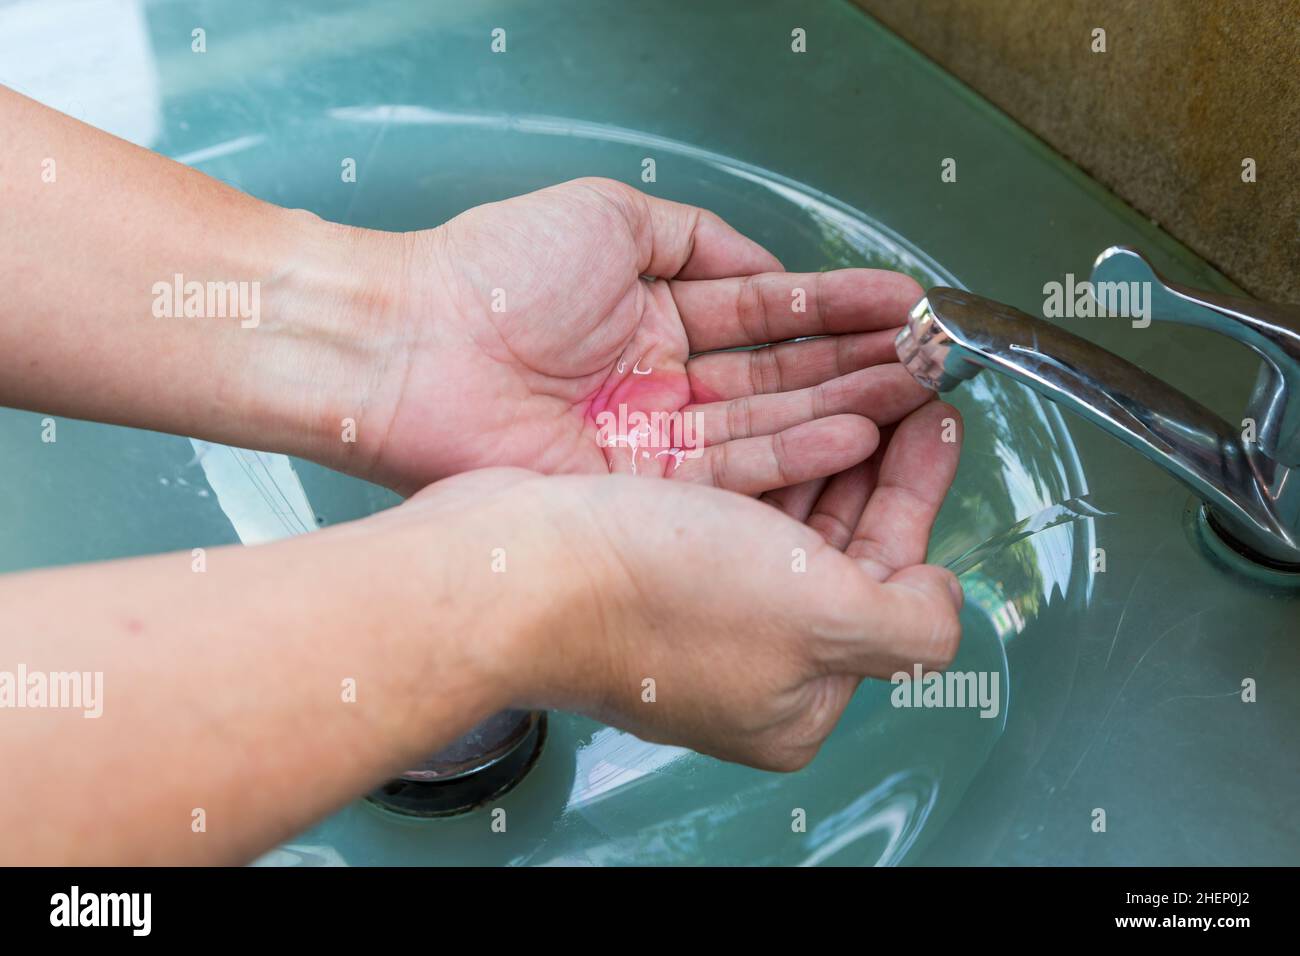 man washing hands before eating Stock Photo